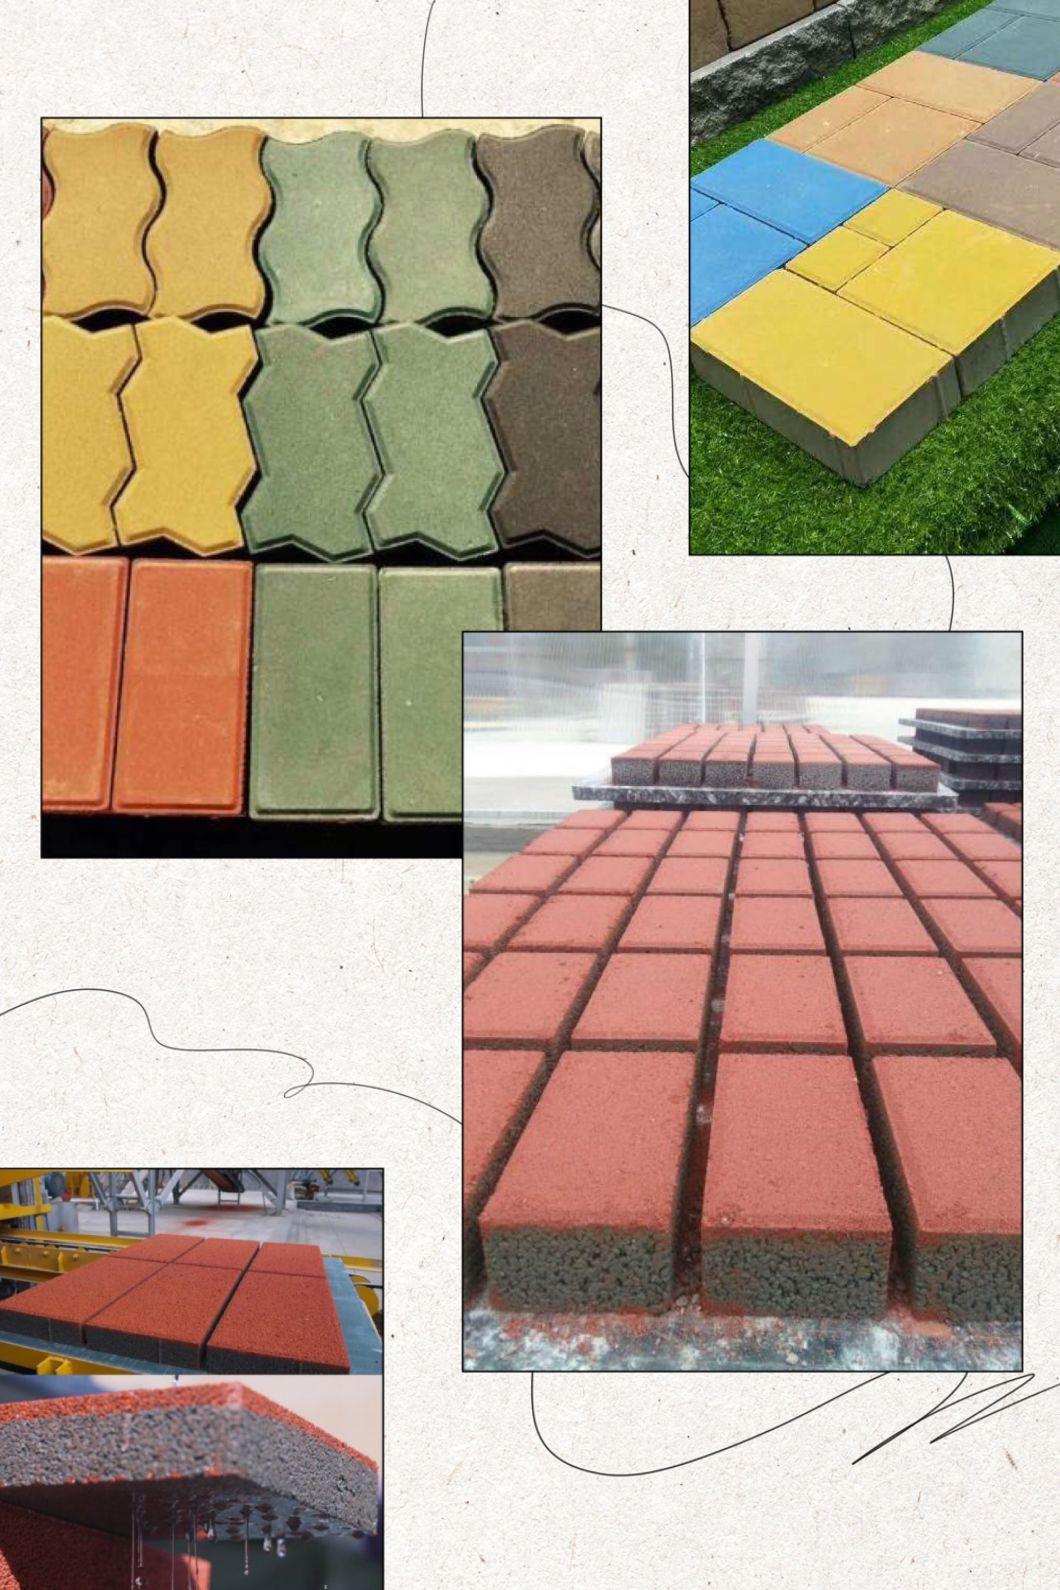 Factory Wholesale Concrete Brick Making Machine Price for Block Moulding